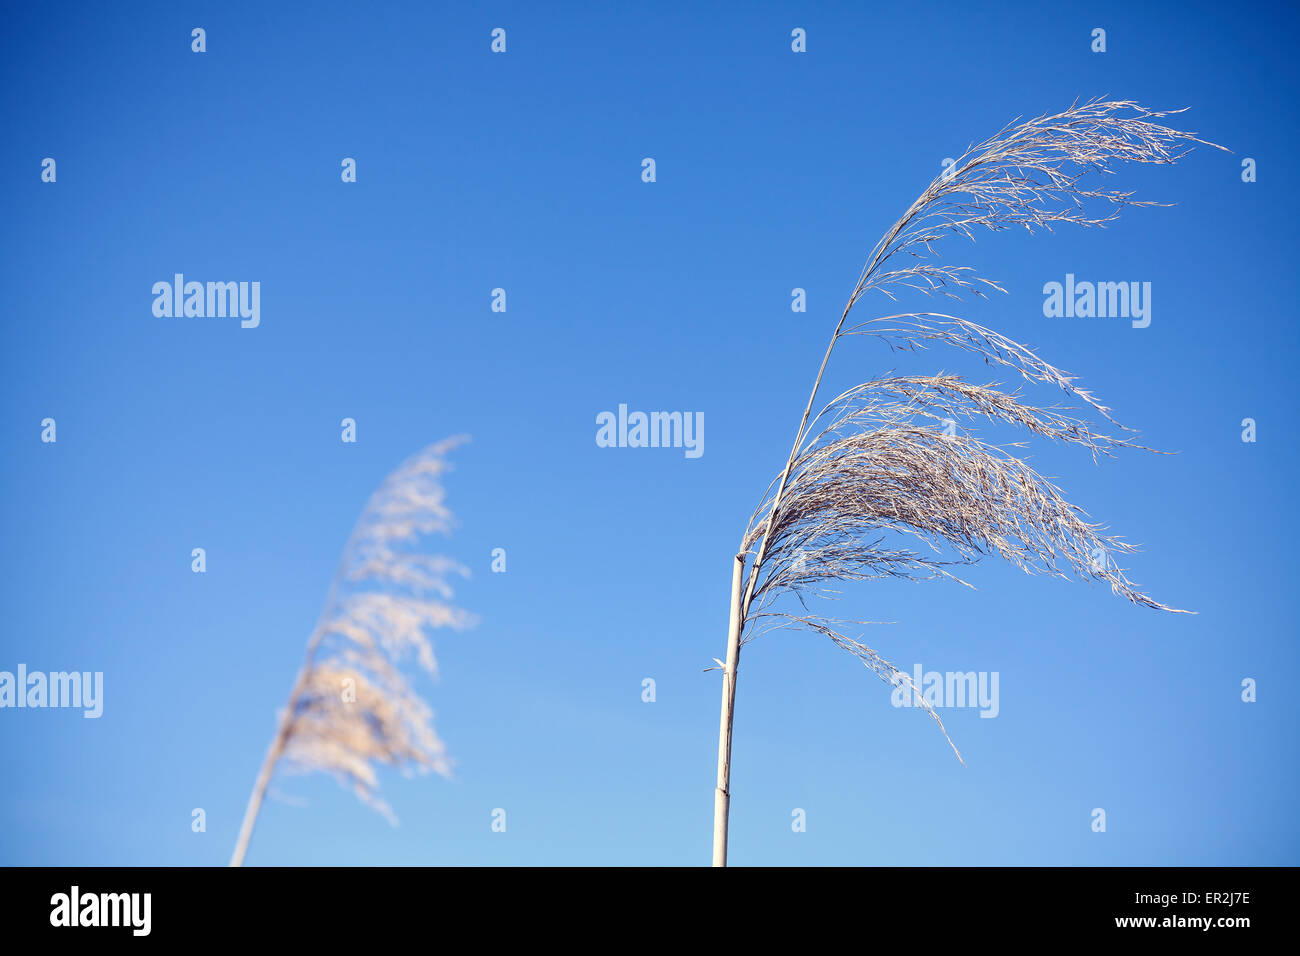 Trockener Reed in blauer Himmel, geringe Schärfentiefe Feld und Vignette-Effekt. Stockfoto